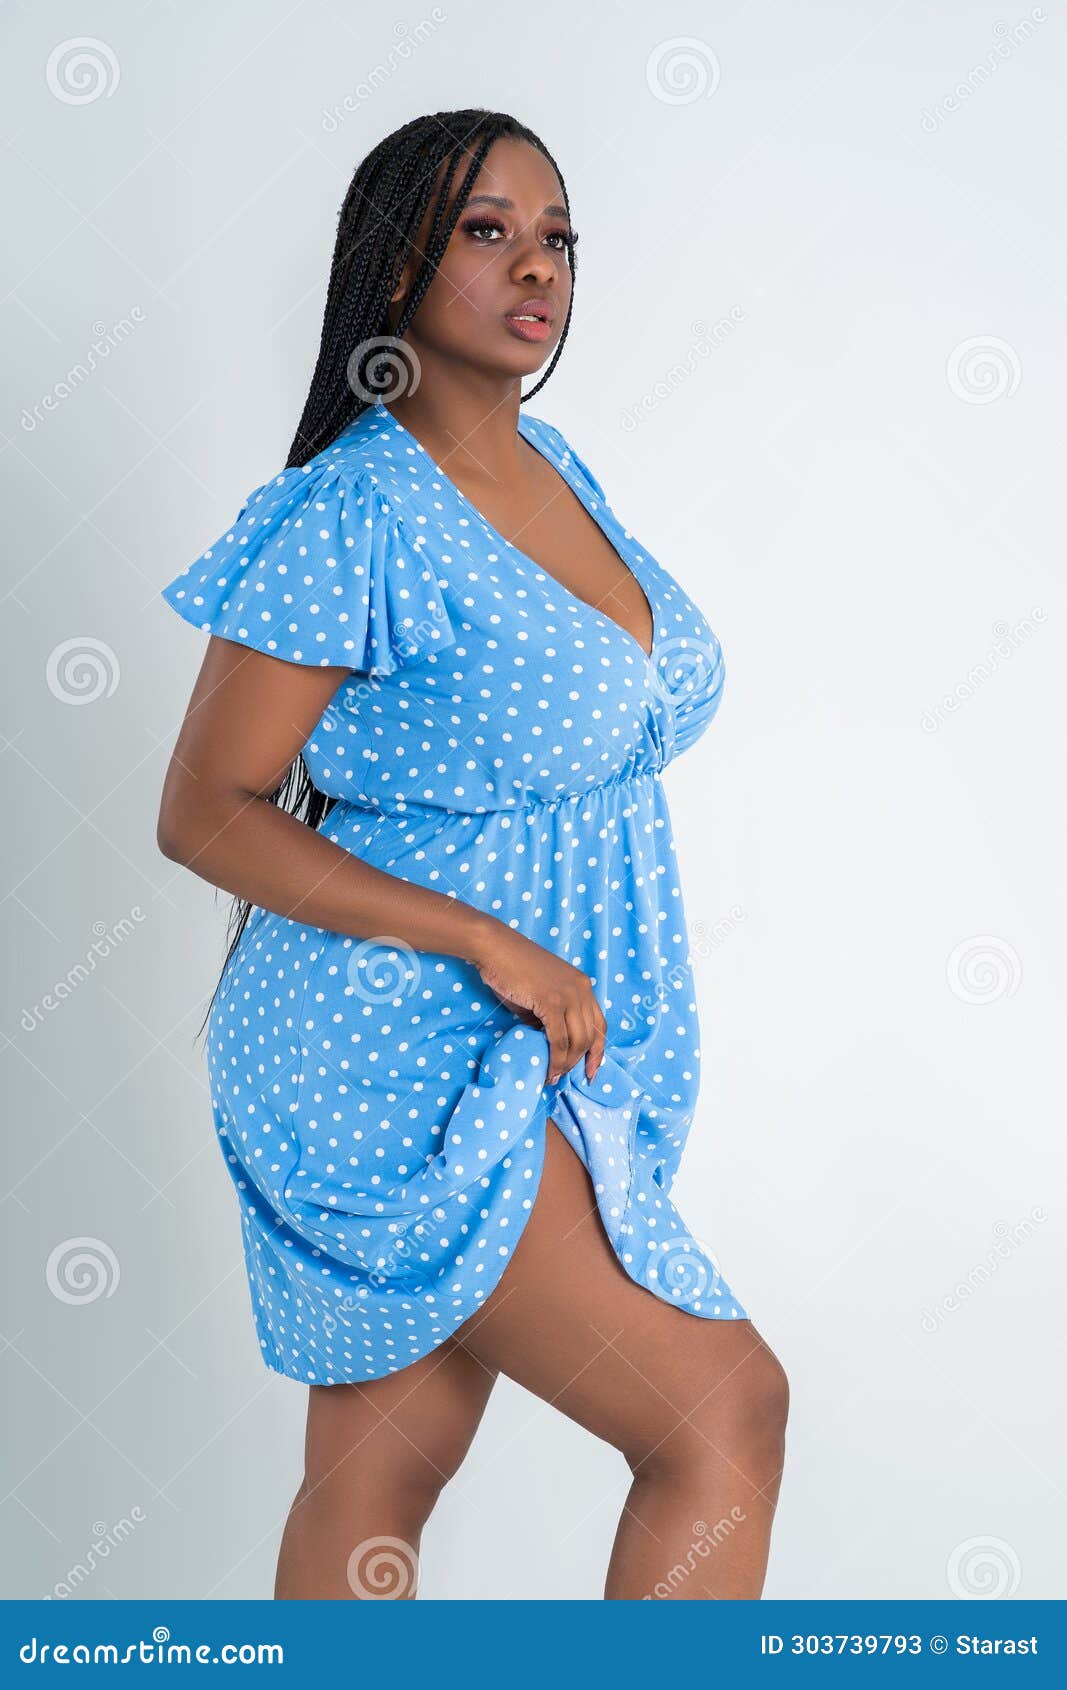 Plus Size Female Model Posing in Blue Dress on White Background